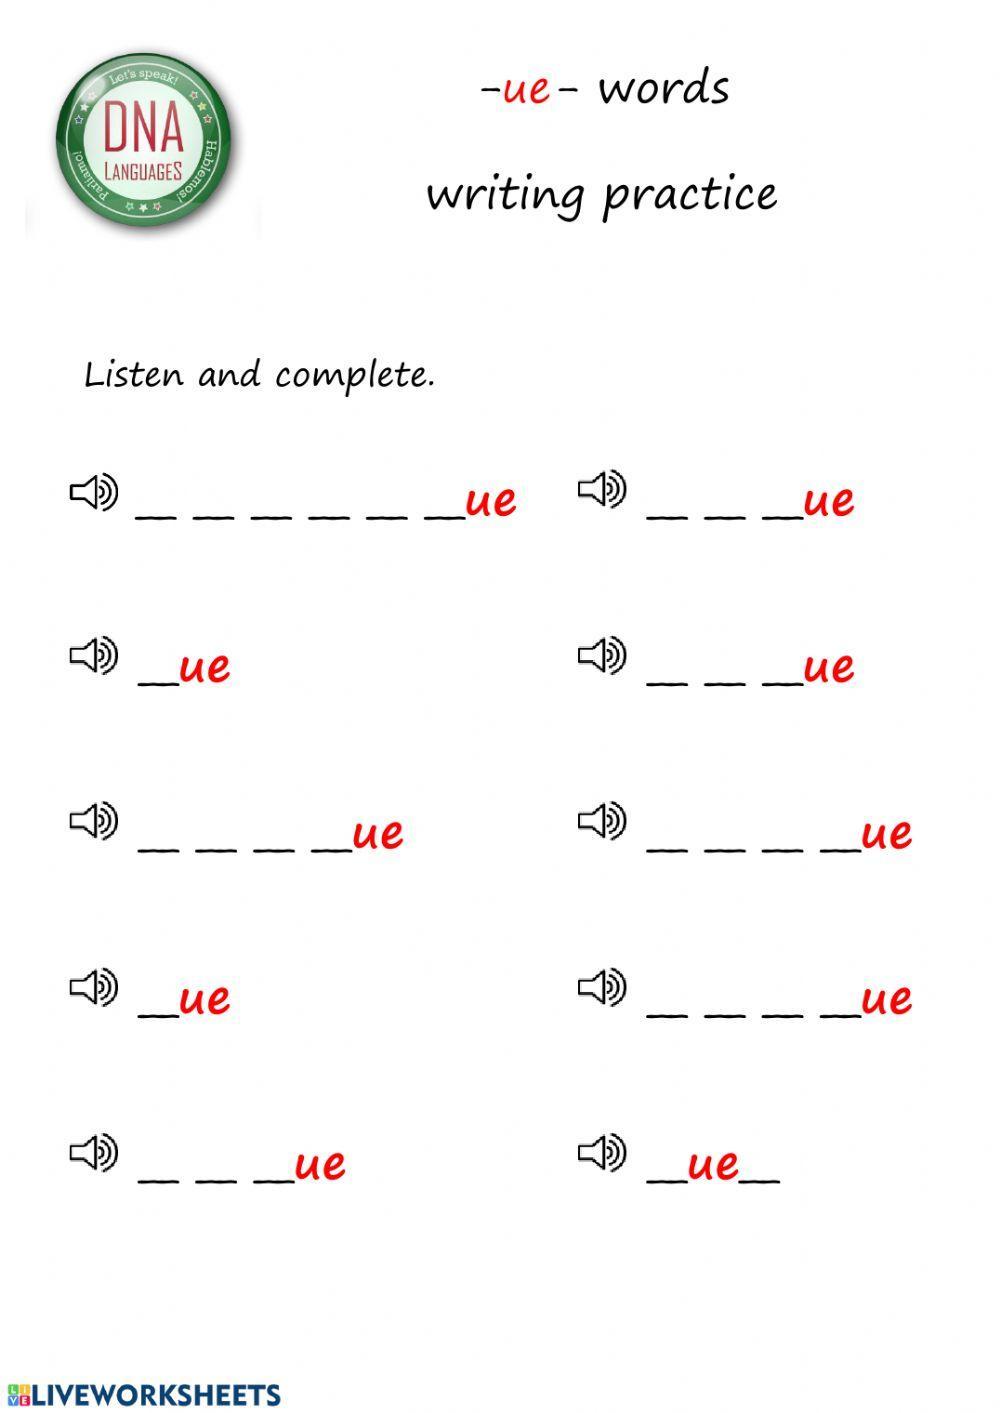 -ue- words writing practice (easy)